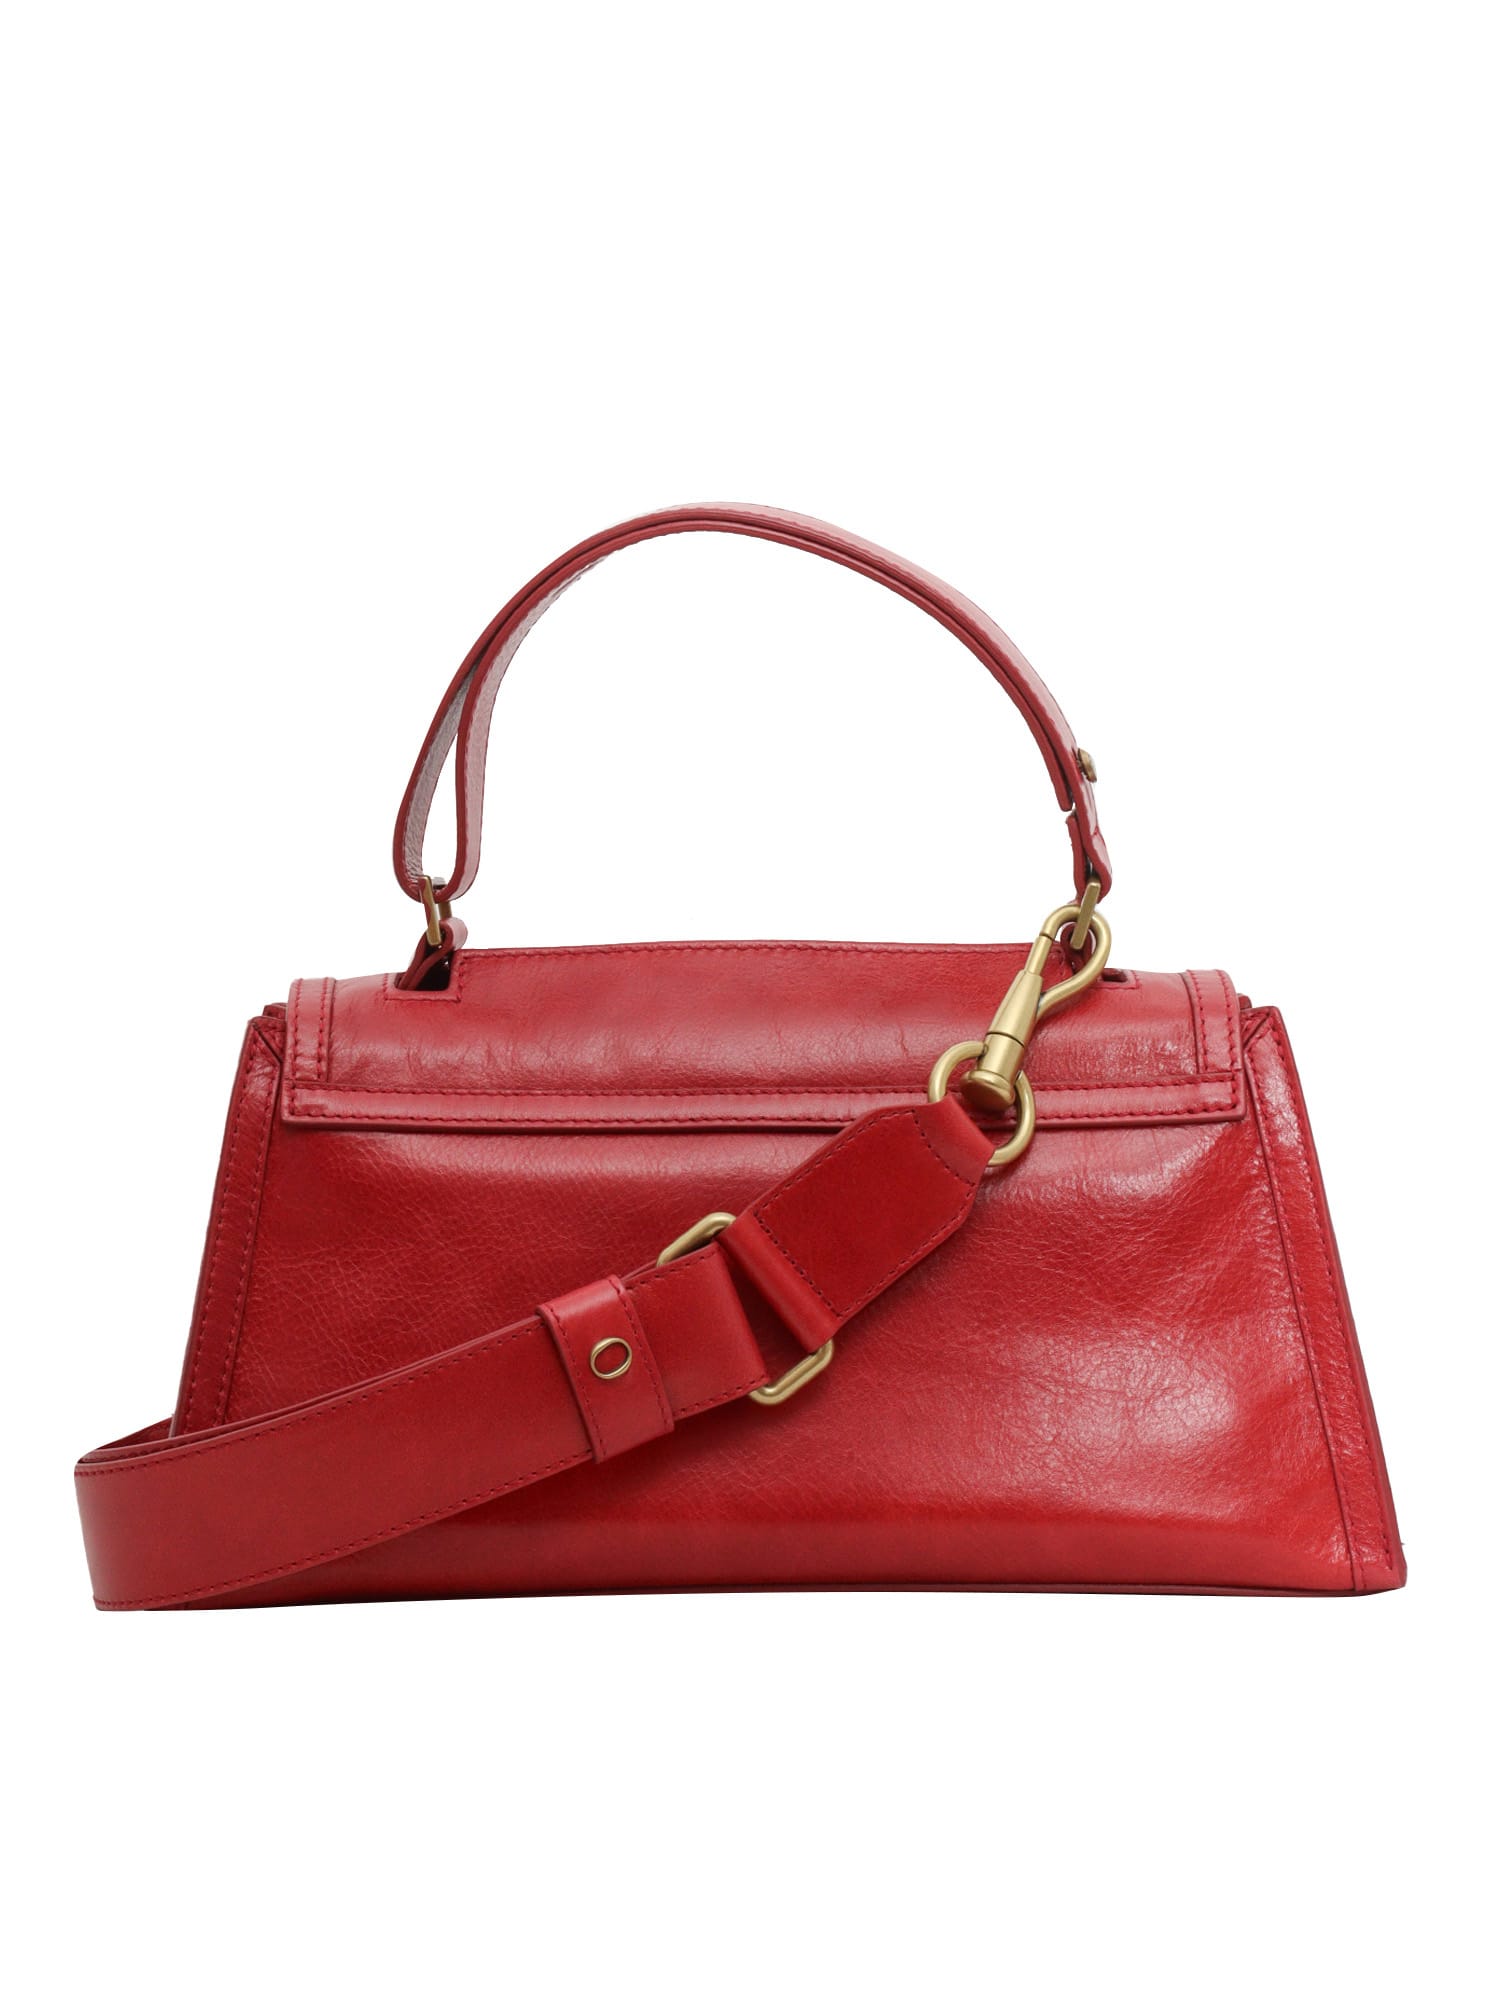 Shop Orciani Red Handbag